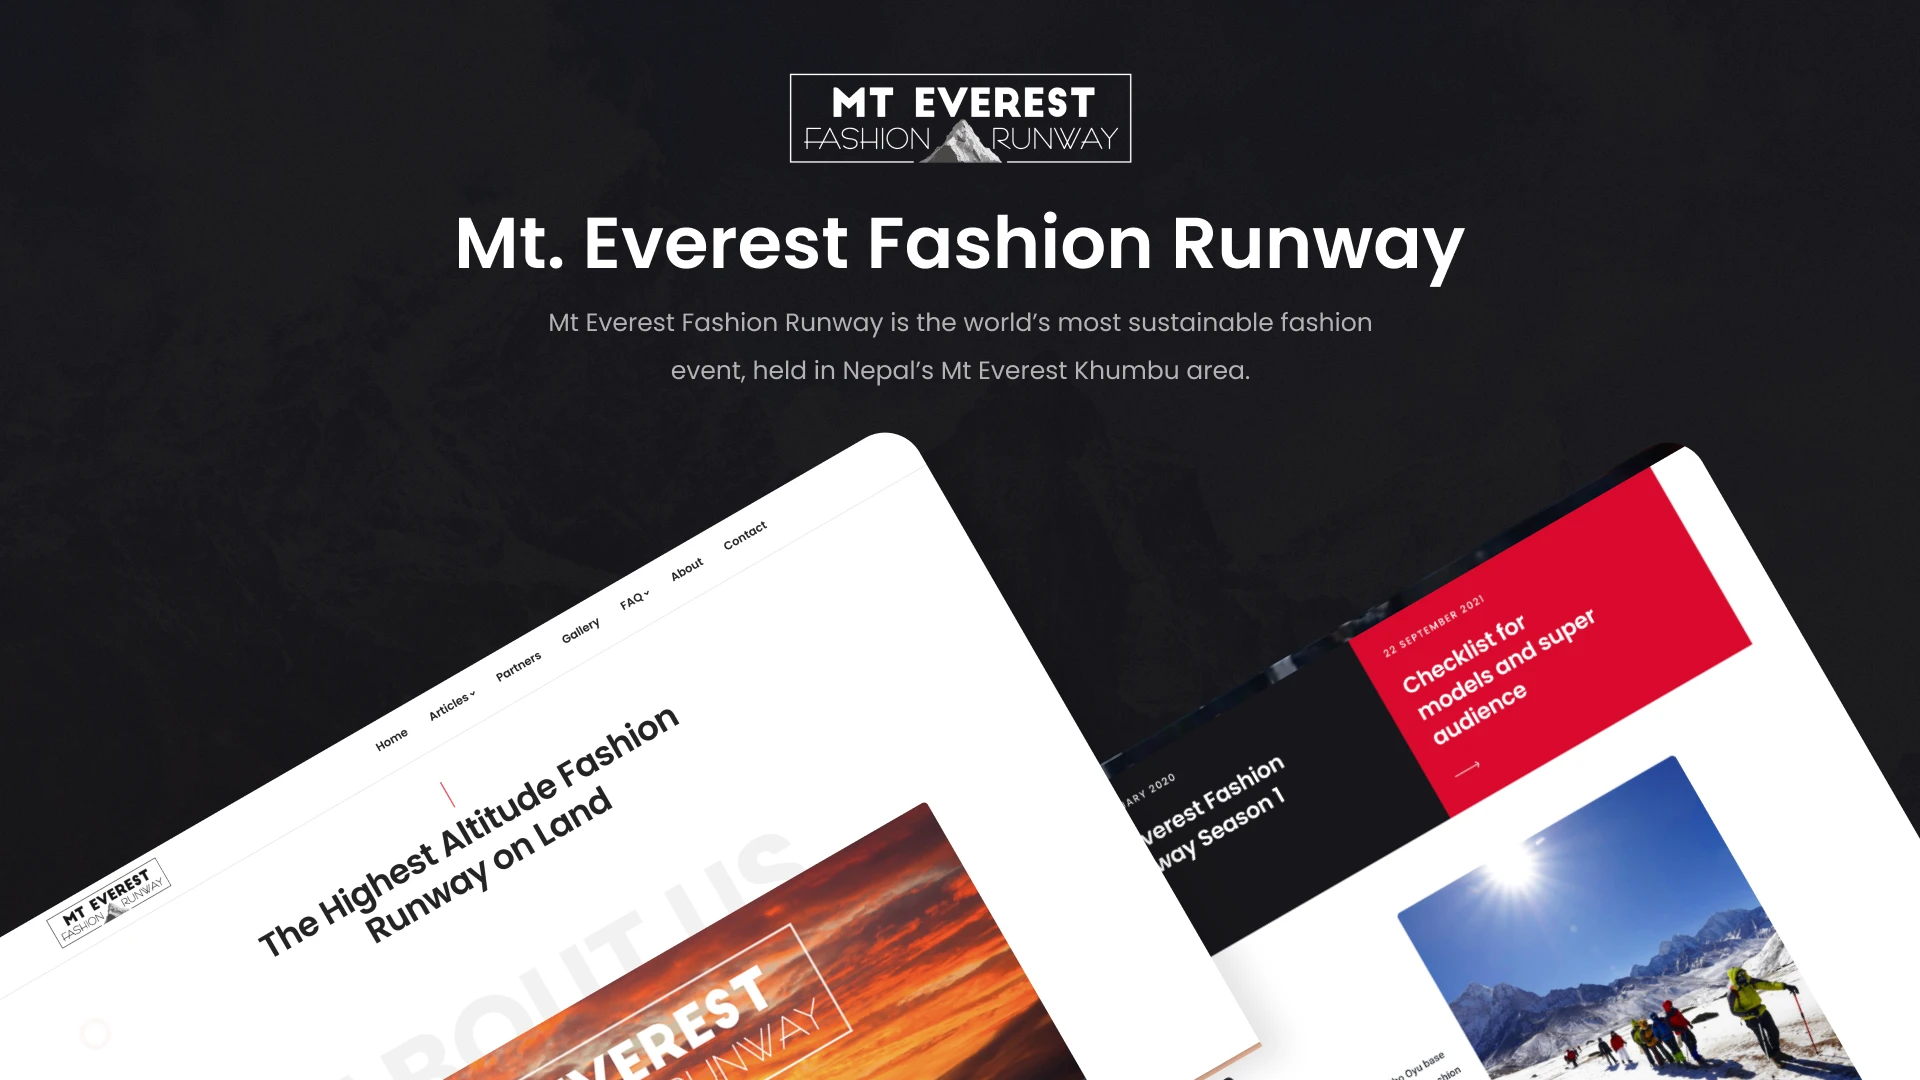 Mt. Everest Fashion Runway